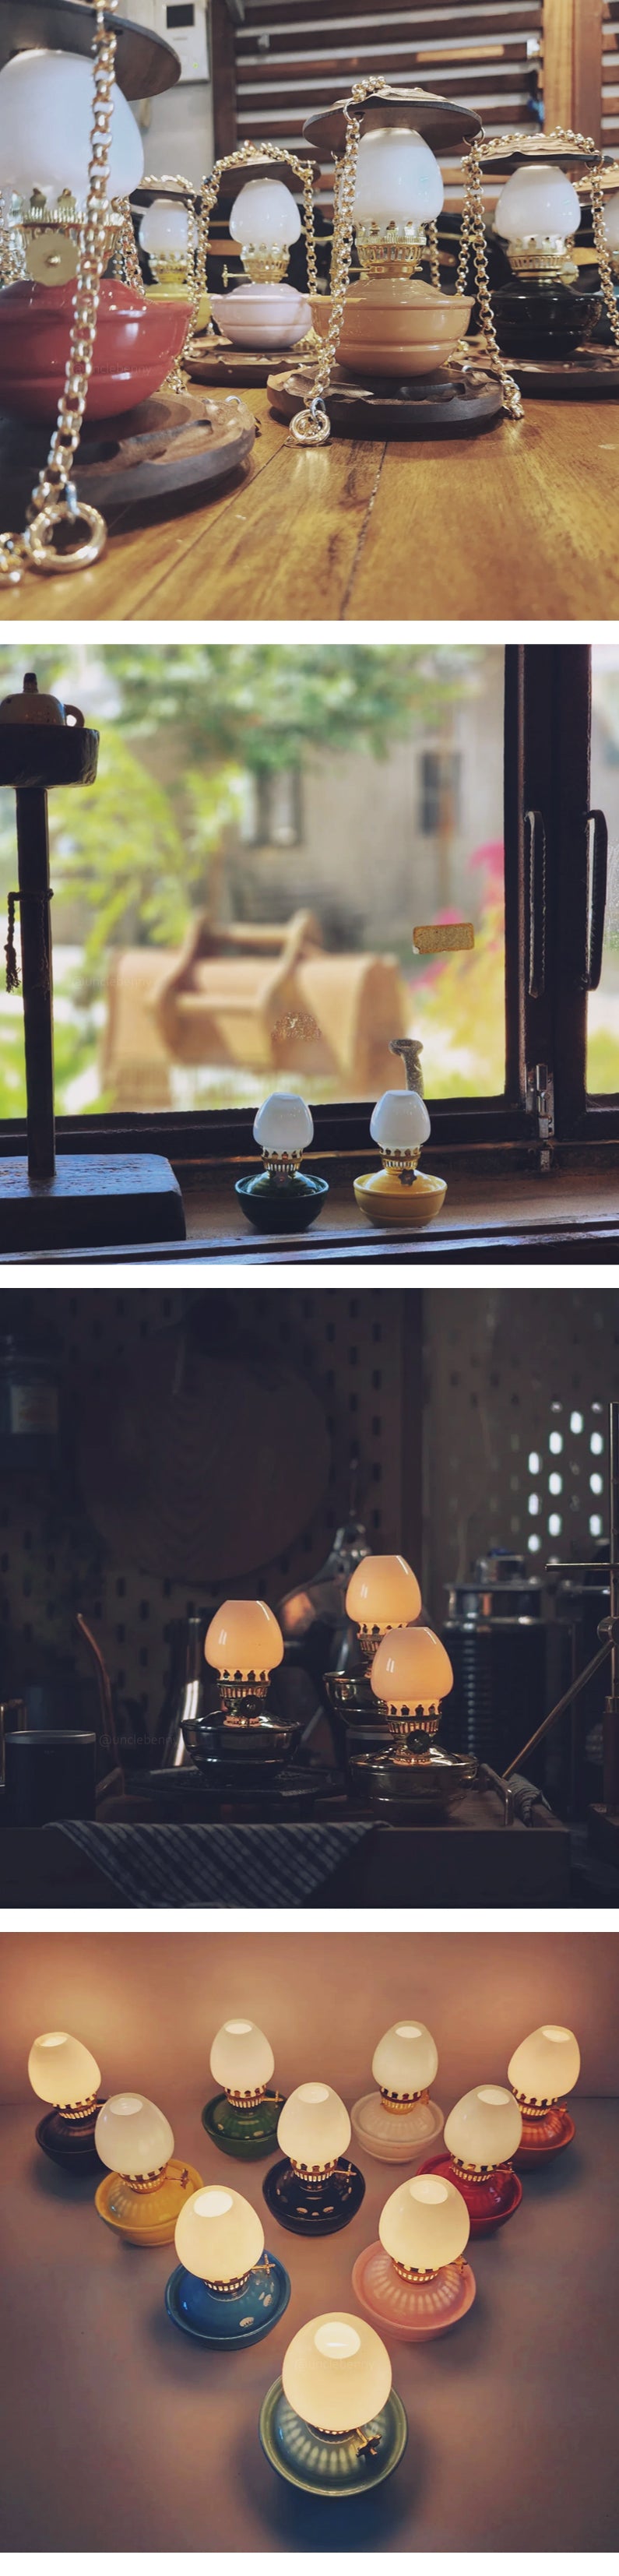 Vintage Oil Lamp • 復古小油燈 - 全系列⓭色懷舊登場 KELLY LAMP